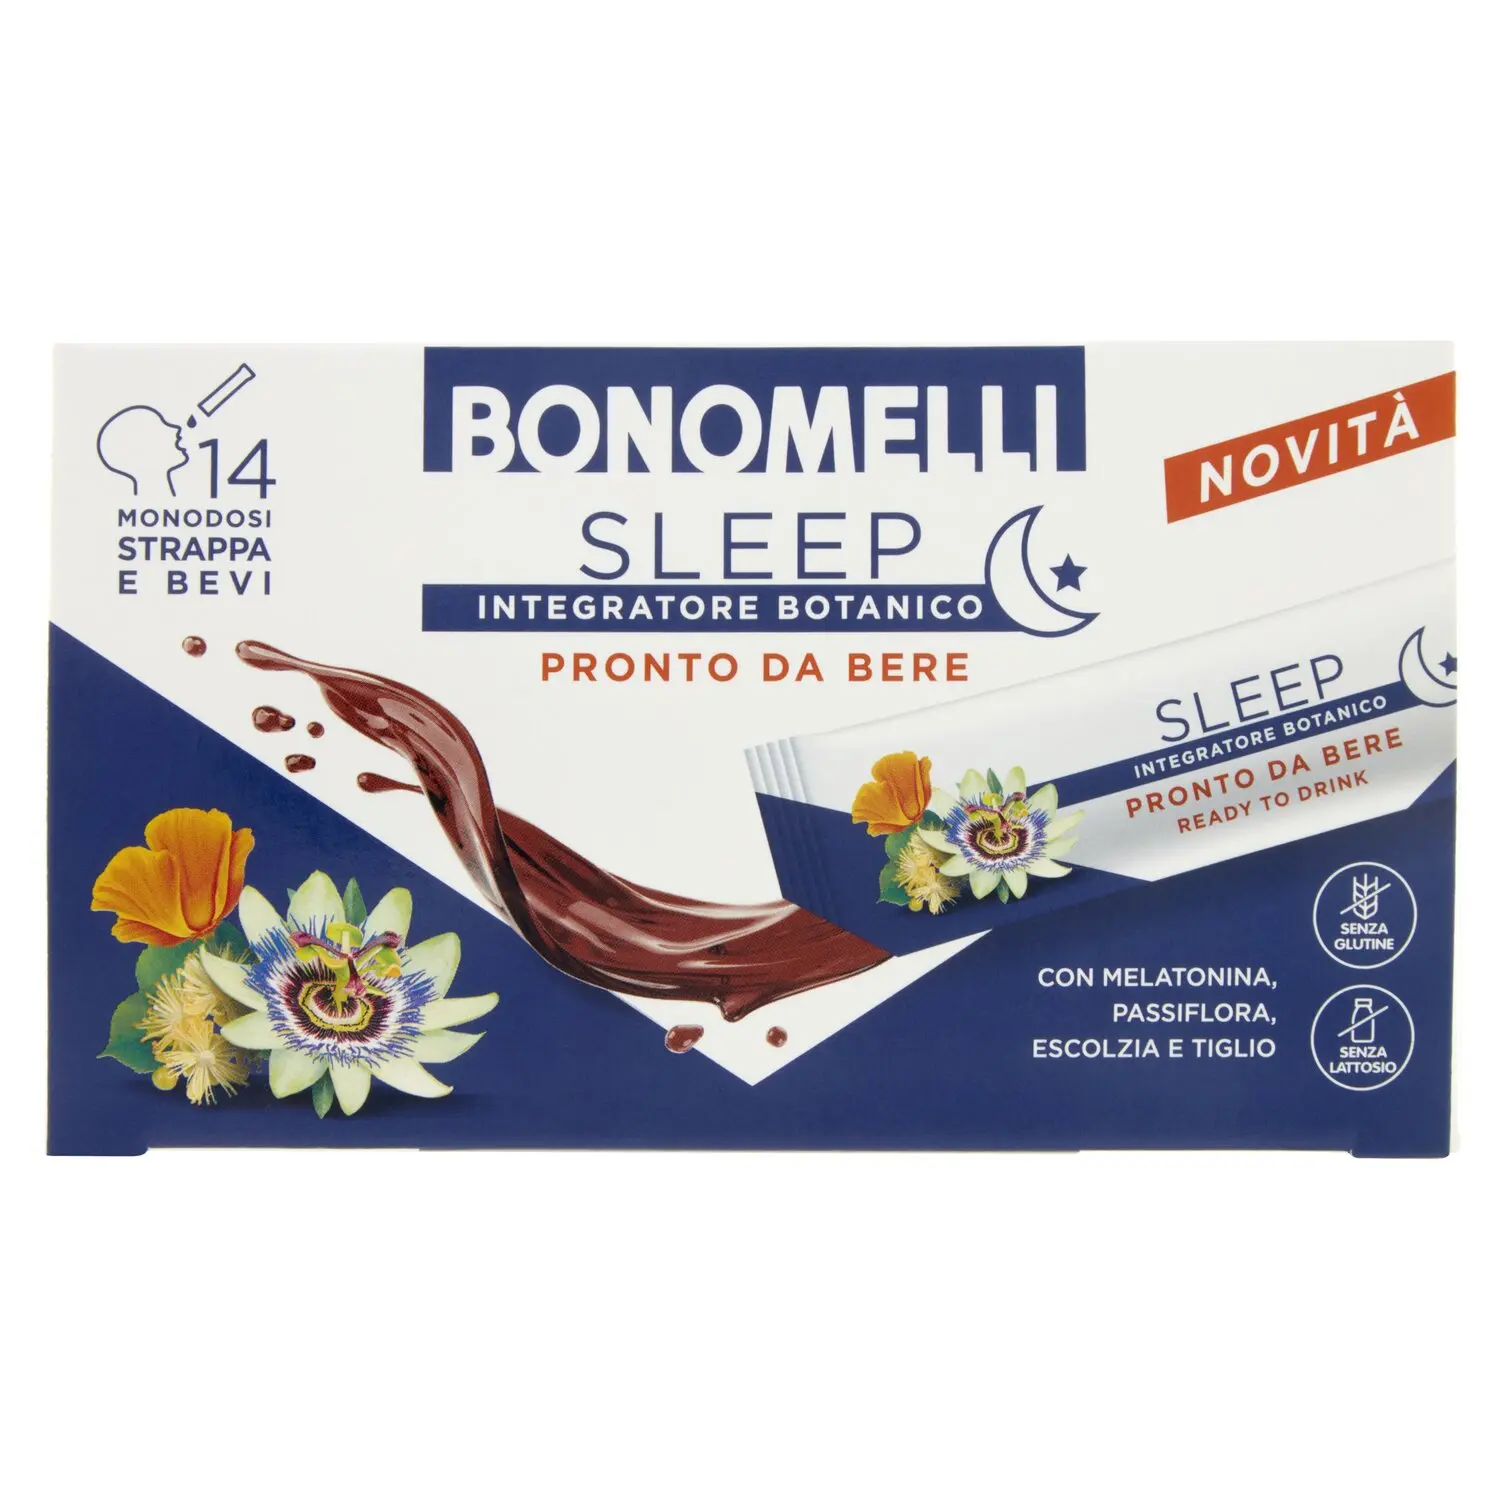 Bonomelli Integratore Botanico Sleep 14 stick monodose 140 ml